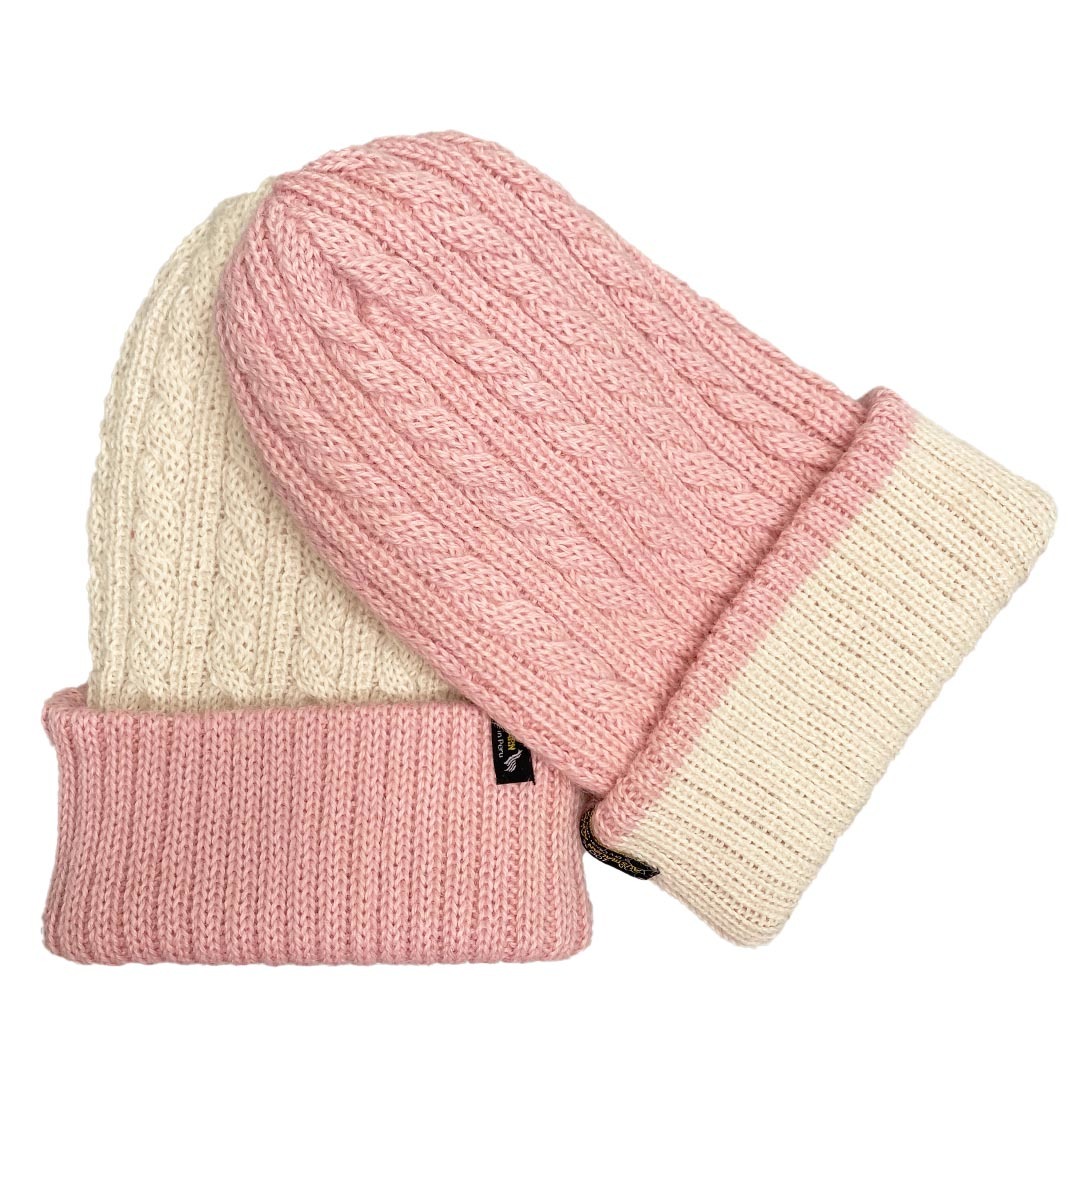 Reversible Hand Knit Alpaca Beanie - Pale Pink / White - 3